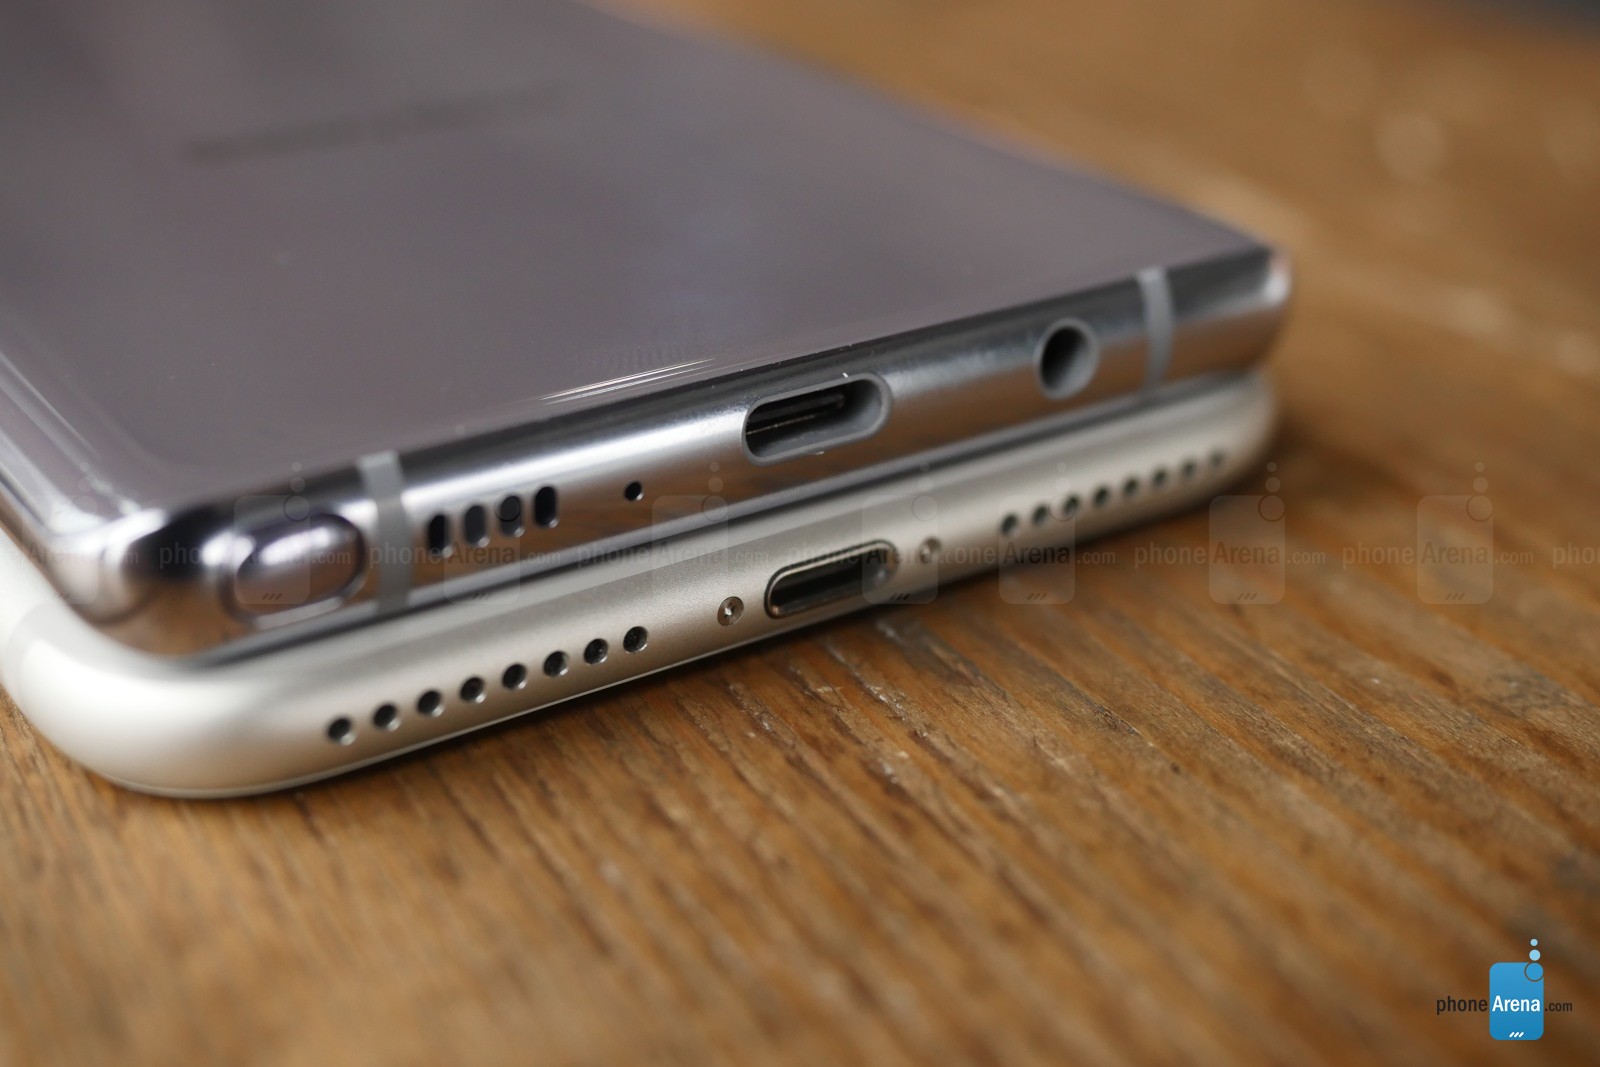 Samsung Galaxy Note 8 sammenligning iPhone 7 Plus 4